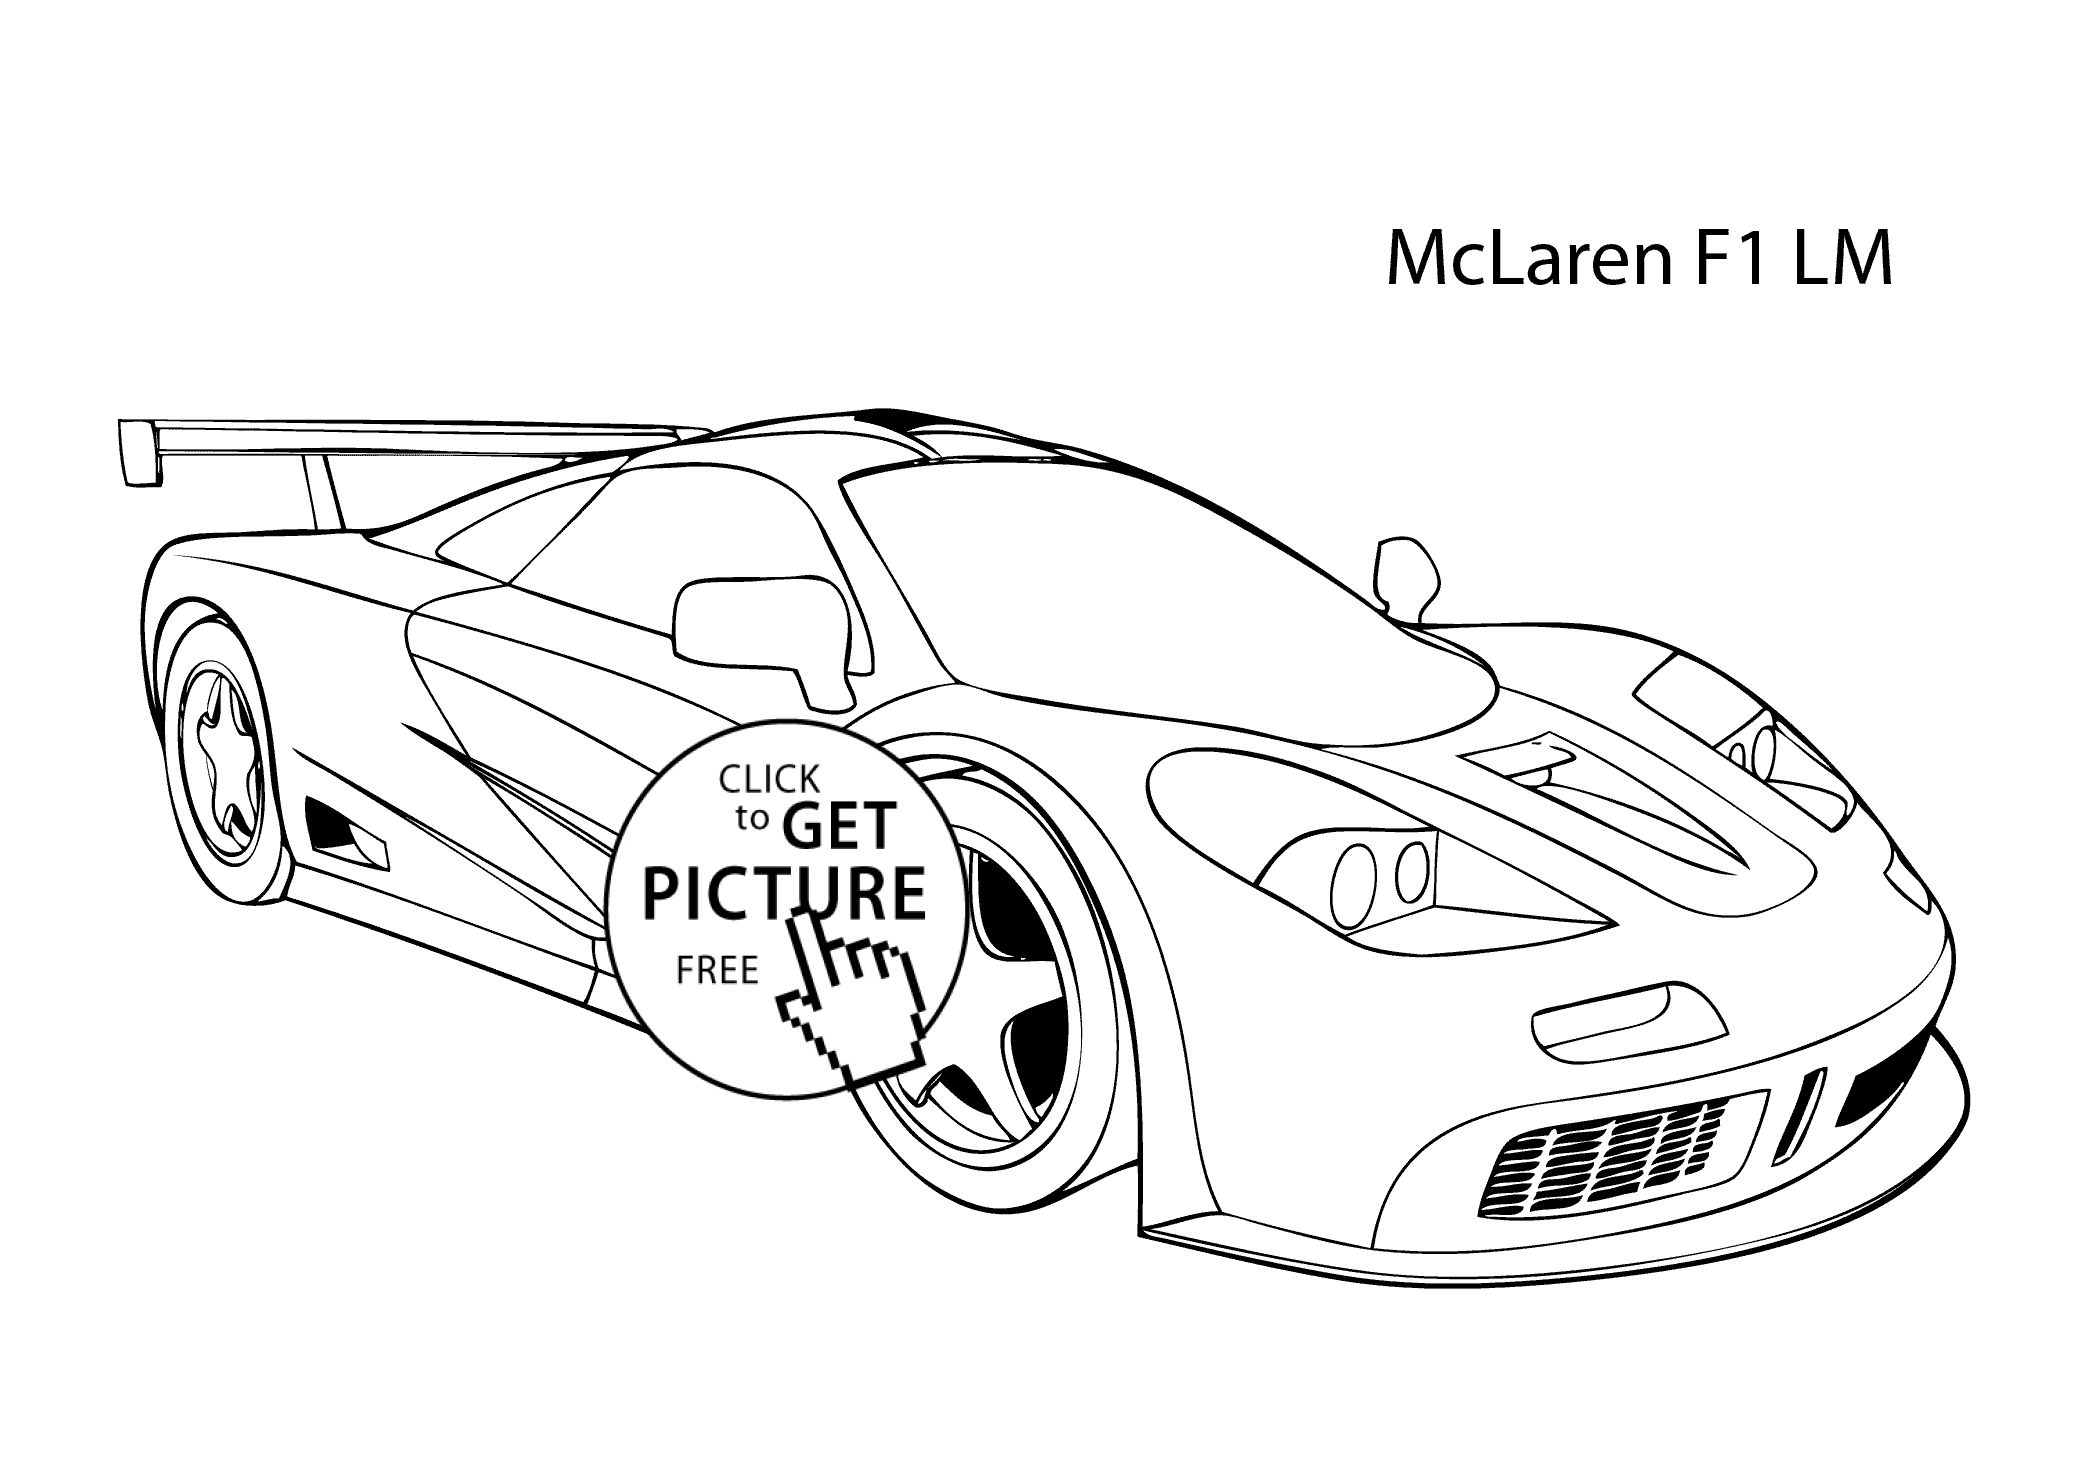 Super car McLaren F1 LM coloring page, cool car printable free ...